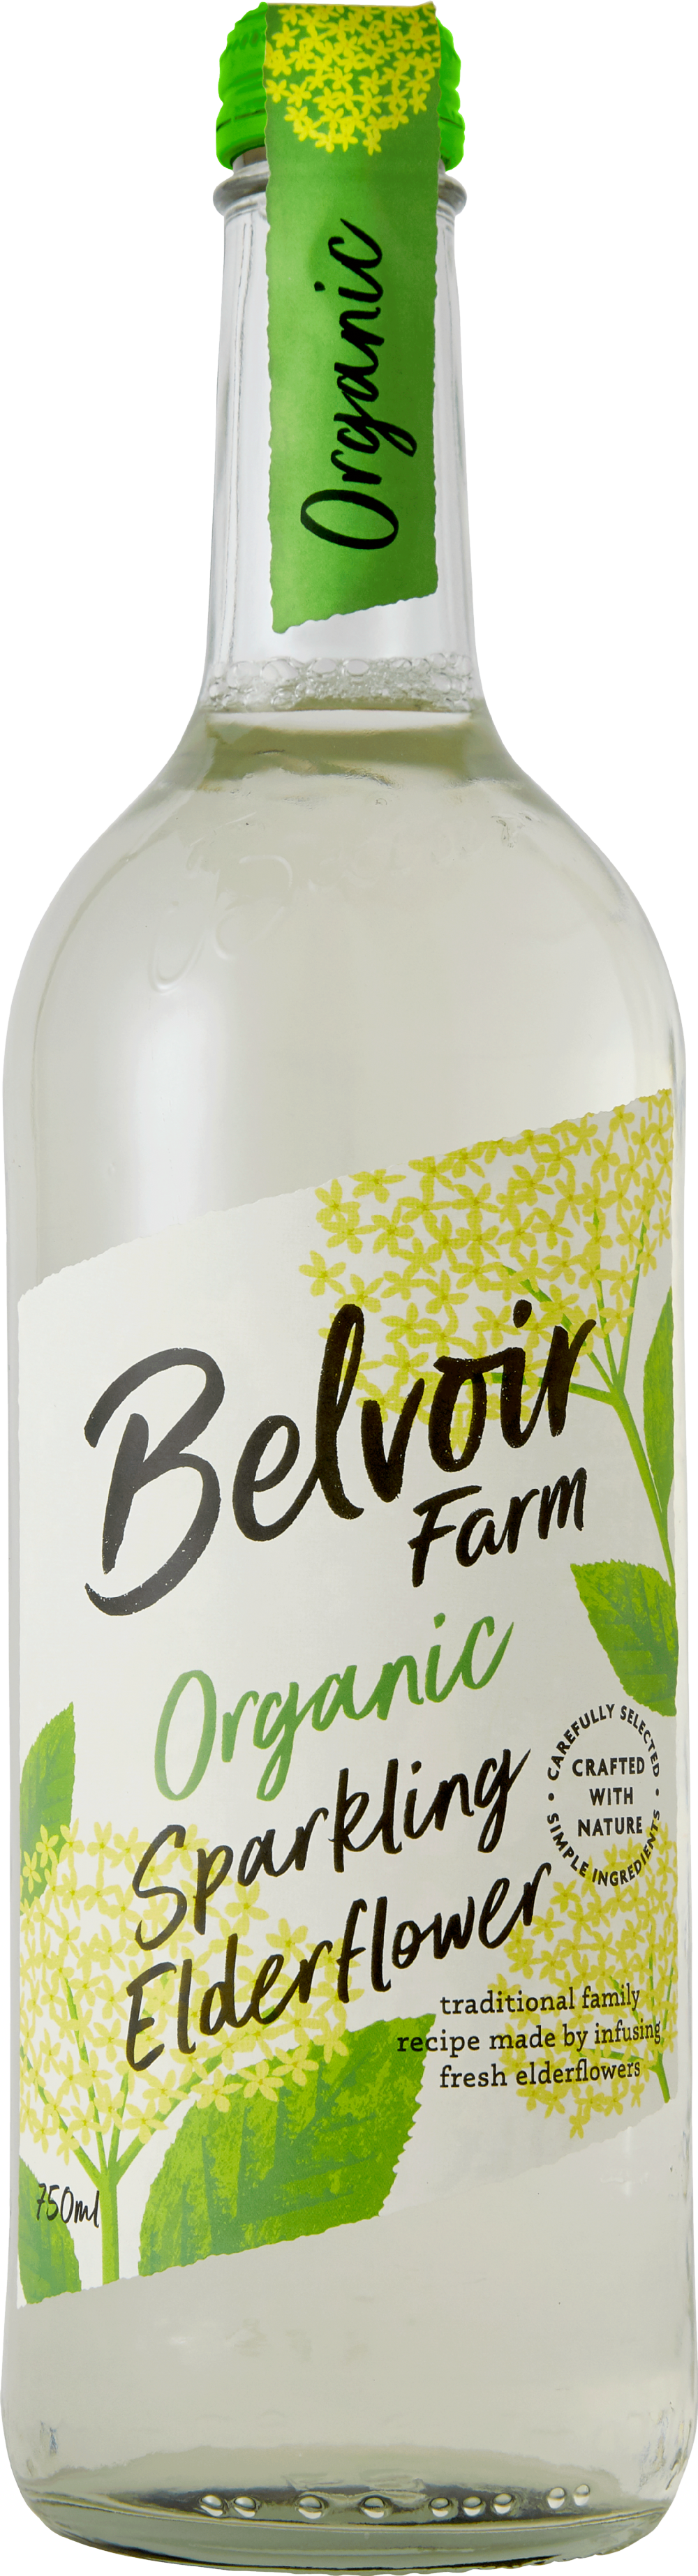 BELVOIR Organic Sparkling Elderflower 75cl